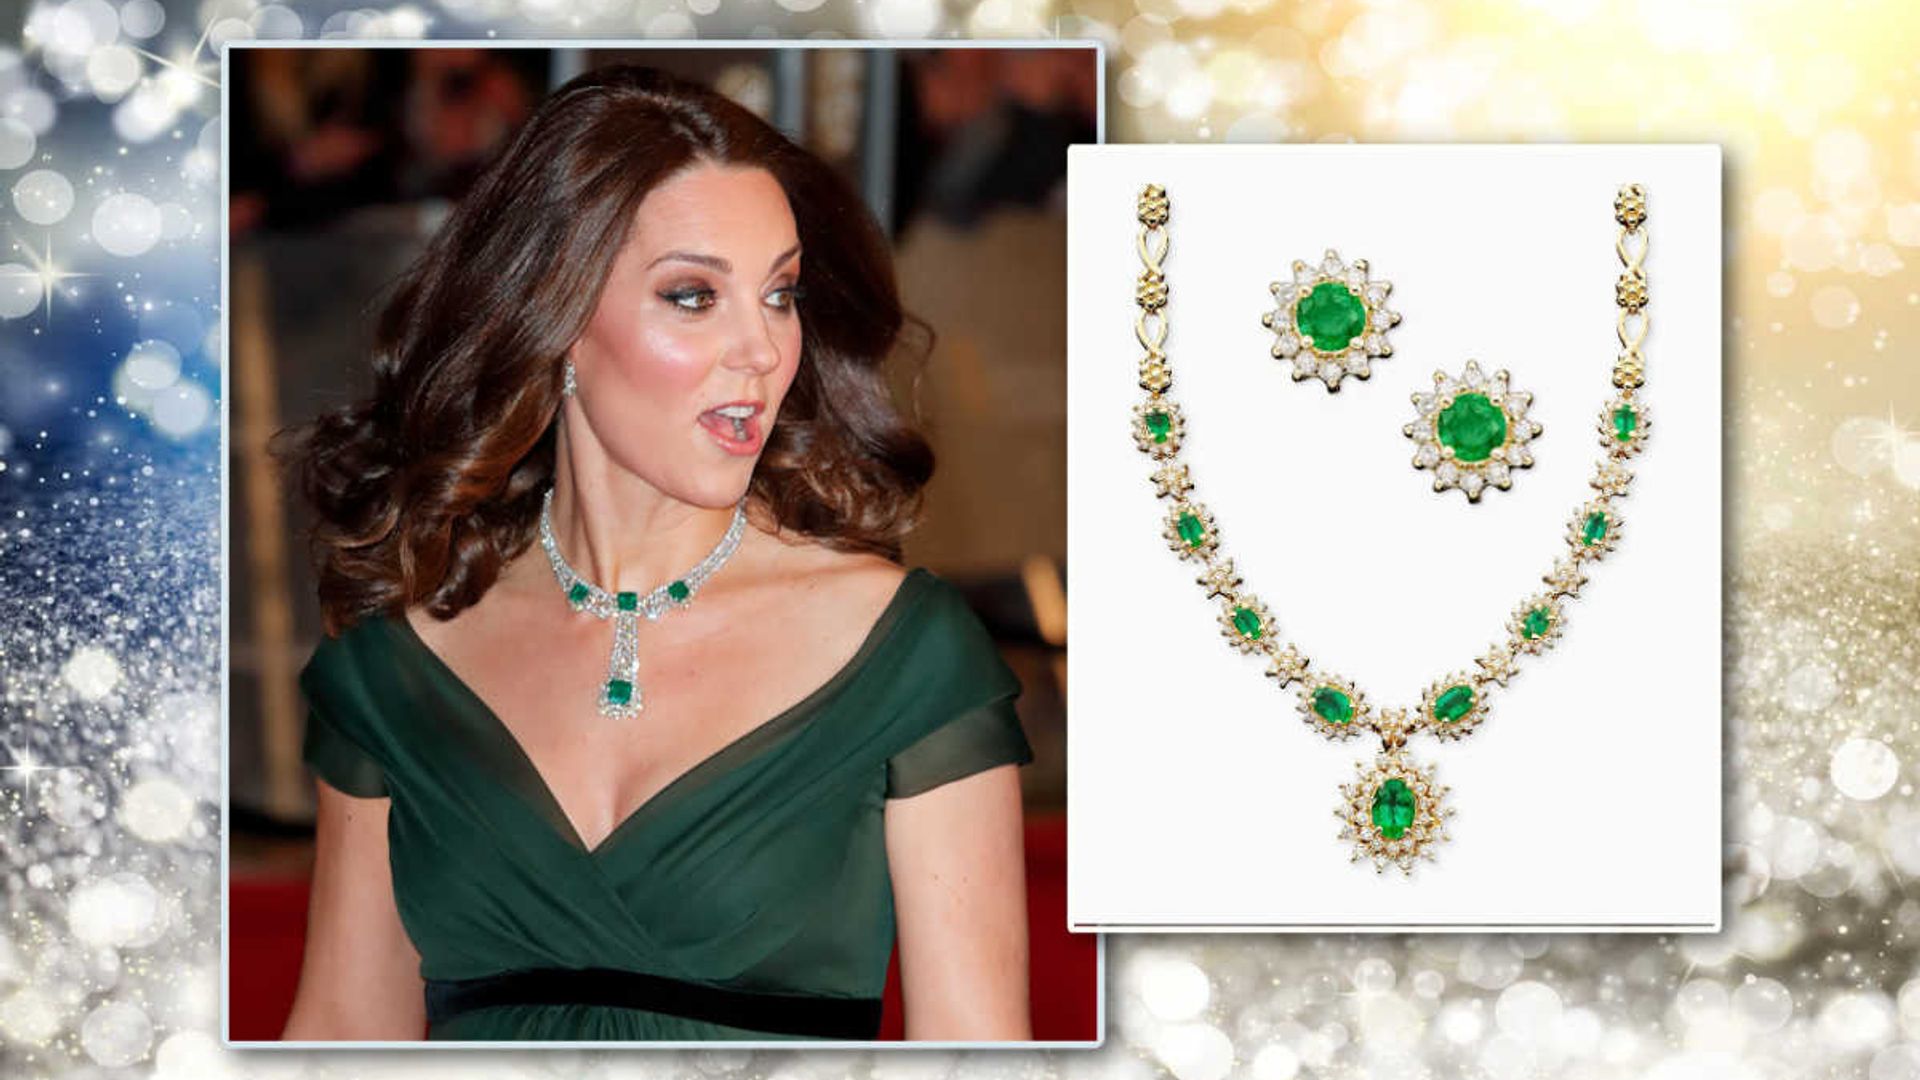 macys royal replica inspired kate middleton jewelry emerald